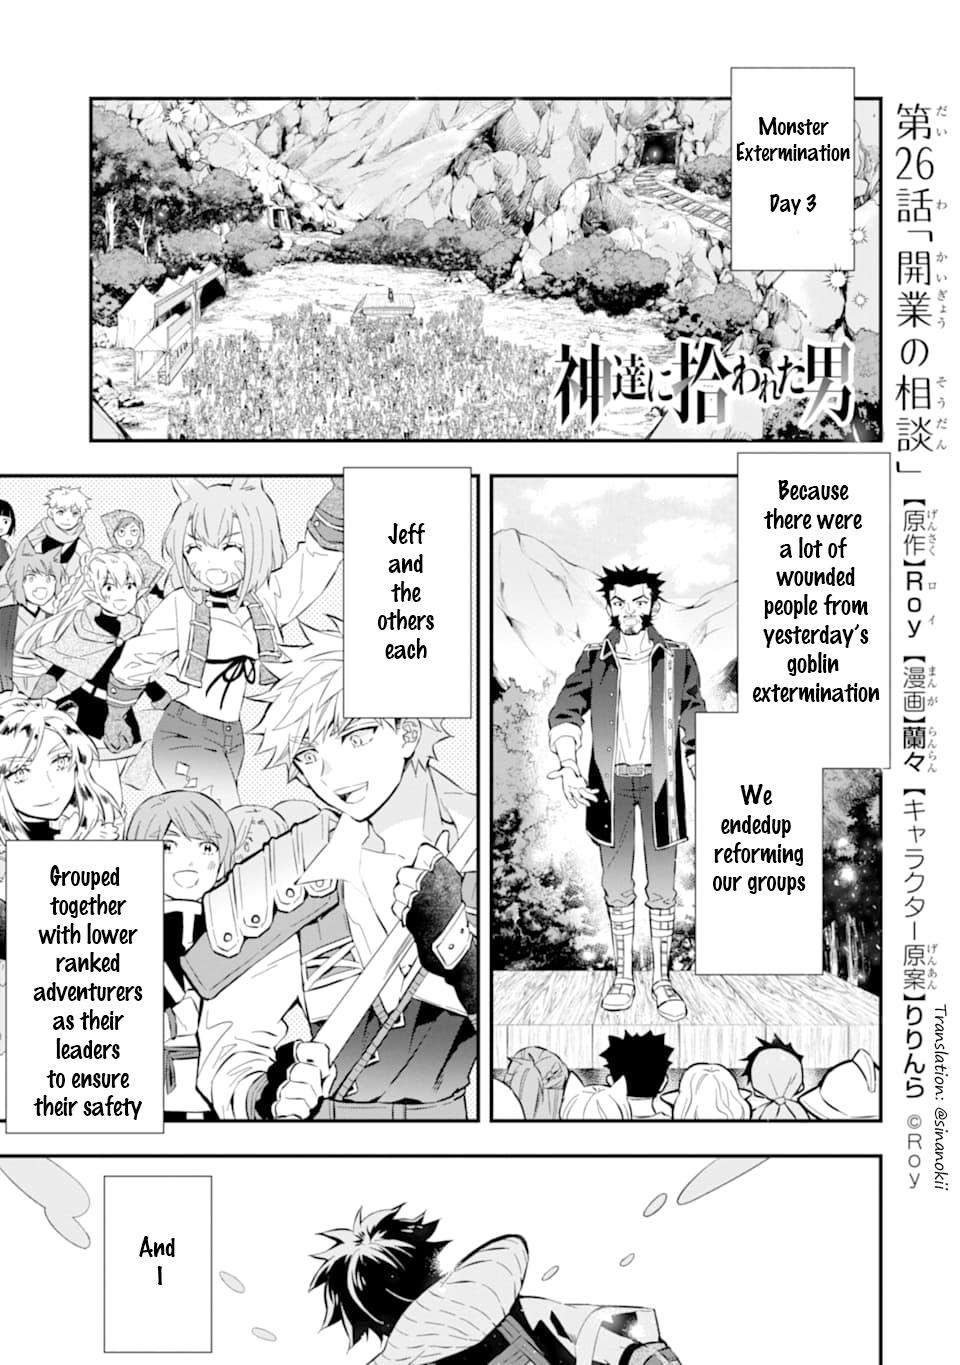 Ler Kami-tachi ni Hirowareta Otoko Manga em Português Grátis Online